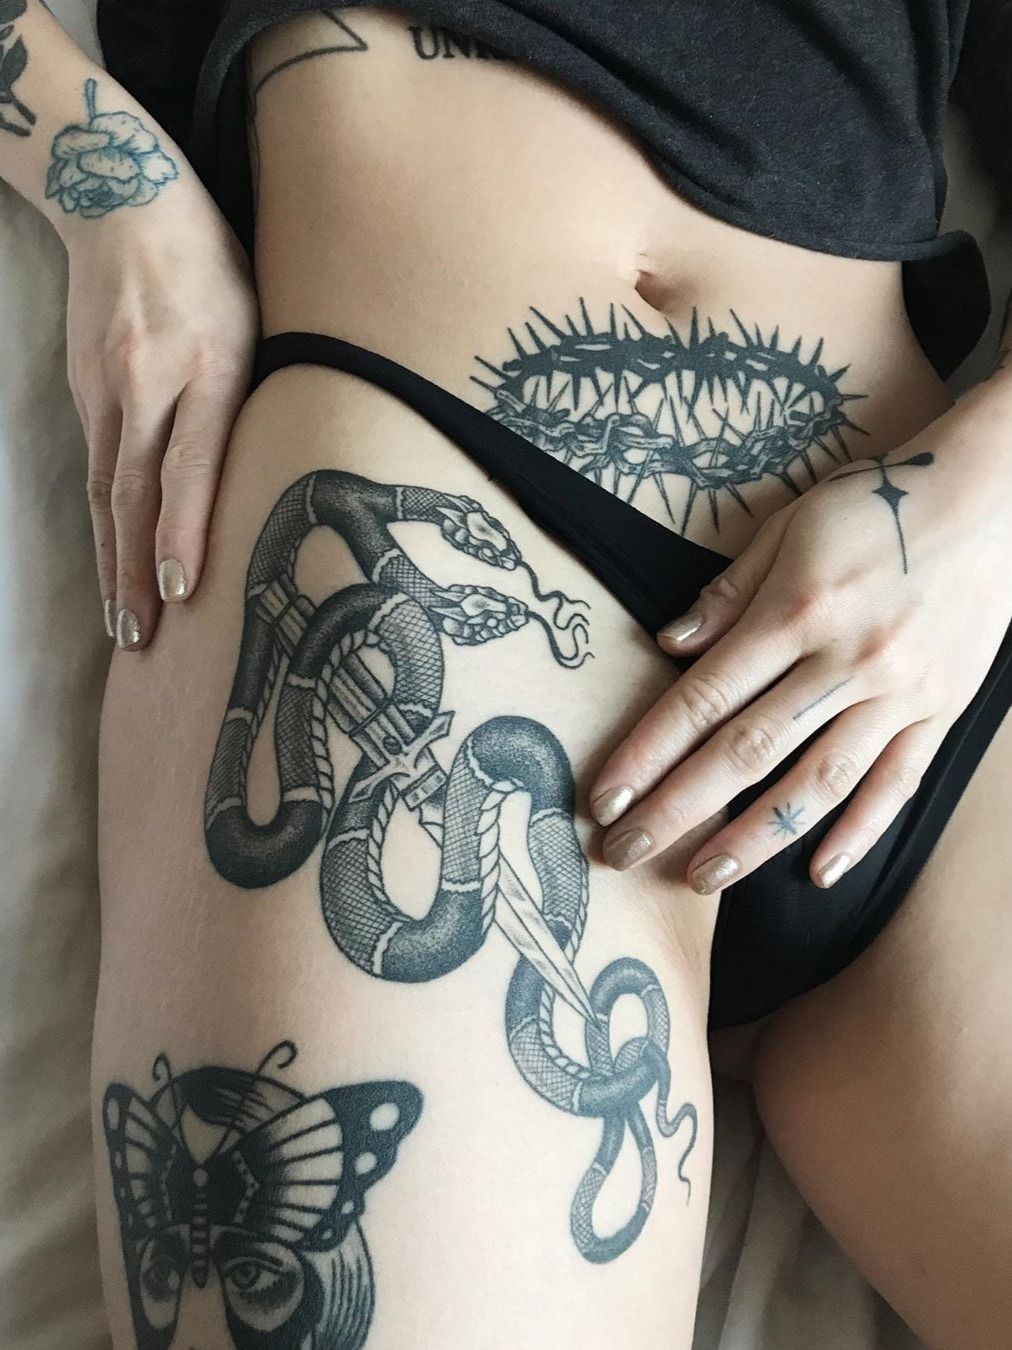 Trayknick Tattoo StickersBody Tattoo Easy to Use Long Lasting  Nonirritating Herbal Snake Temporary Tattoo Sticker for Beauty   Walmartcom